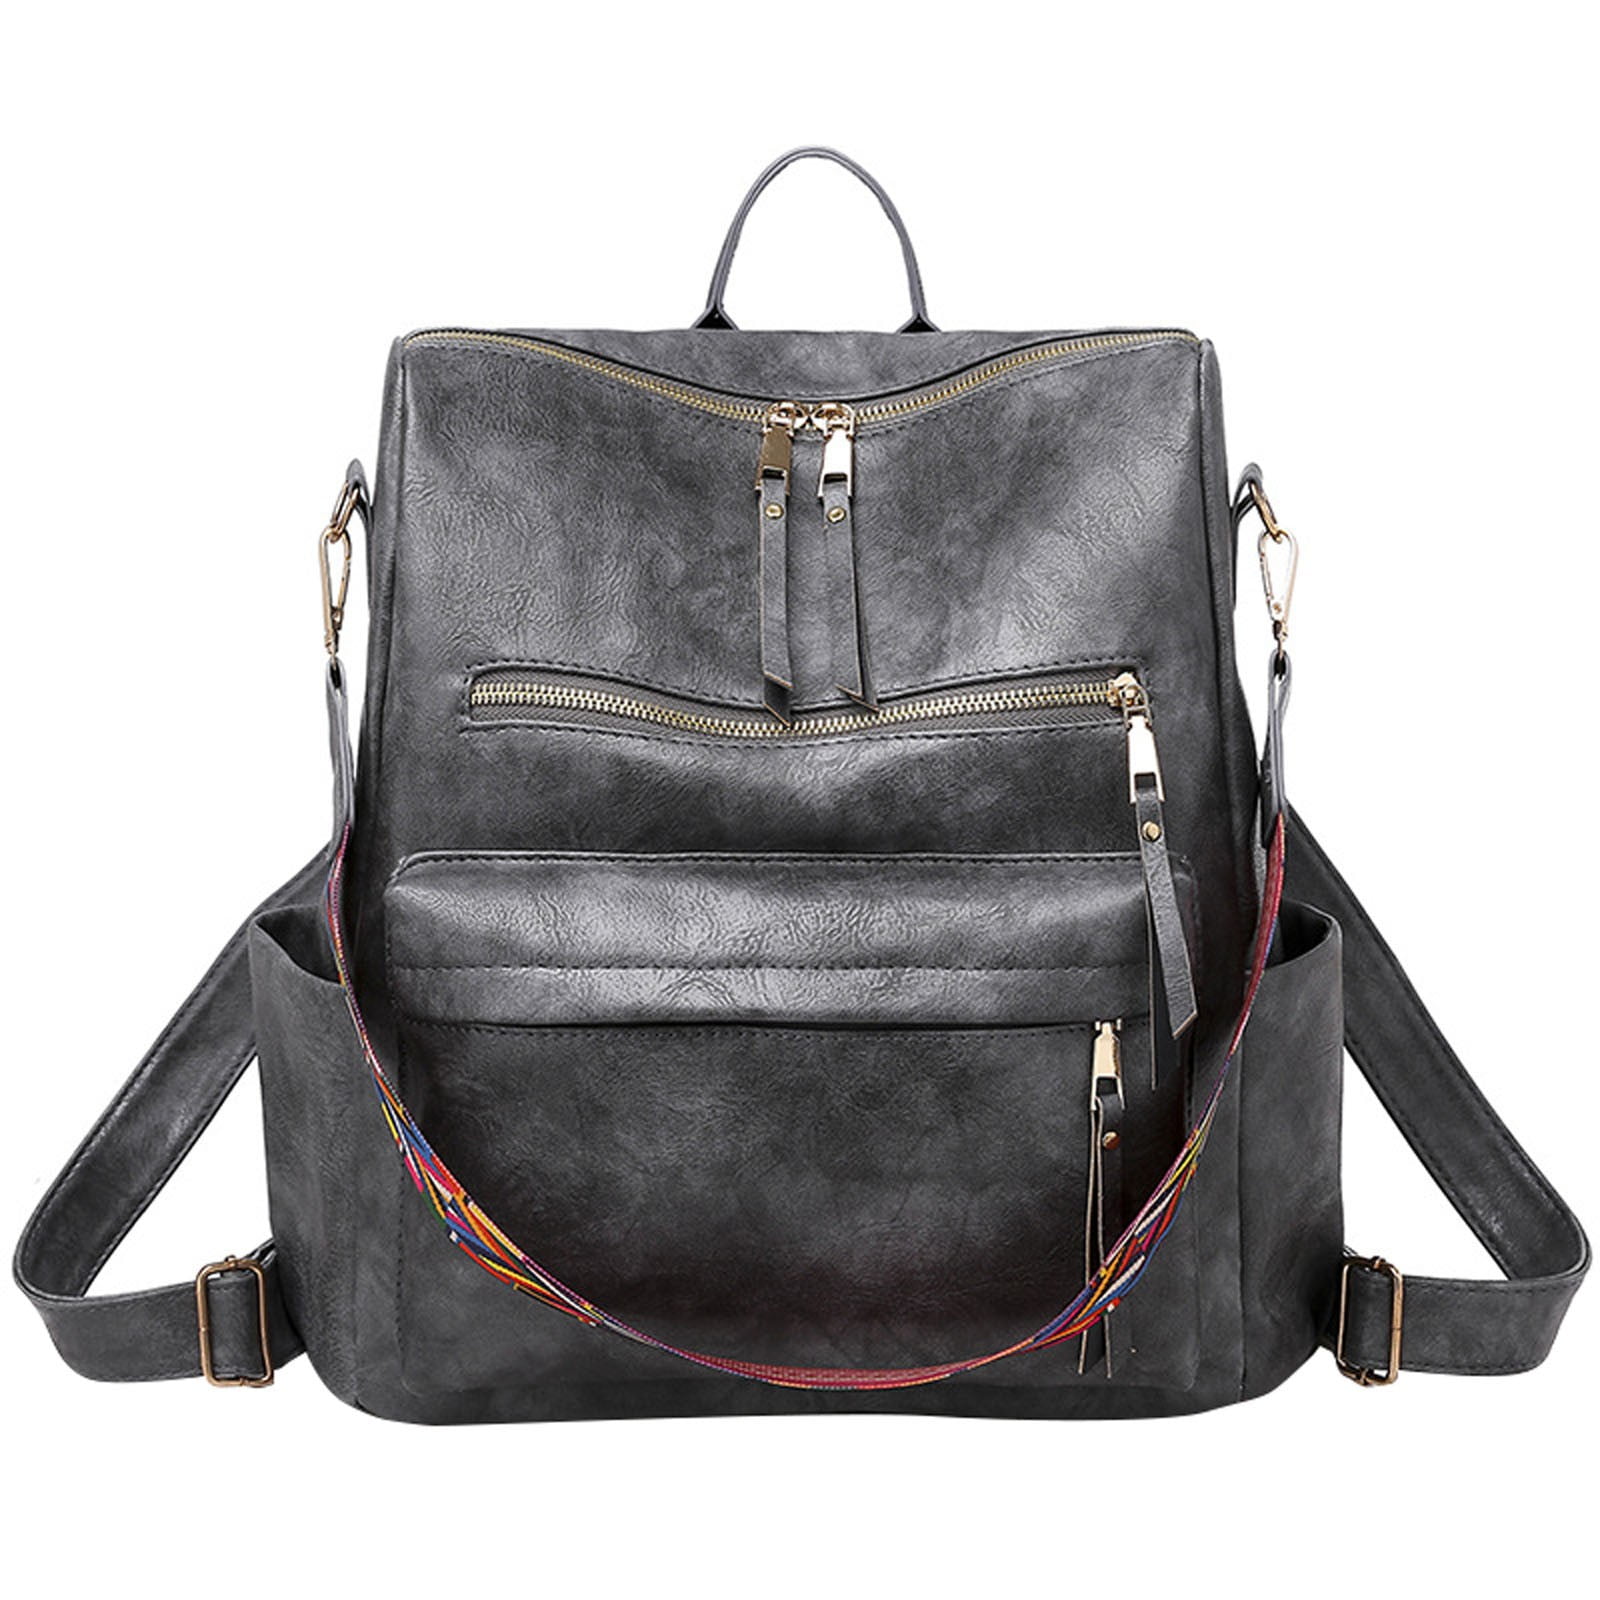 yievot Backpack Purse For Women,Fashion Leather Handbag,Travel Bag,Satchel  Rucksack Ladies Bag,Shoulder Multifunctional Travel Bag